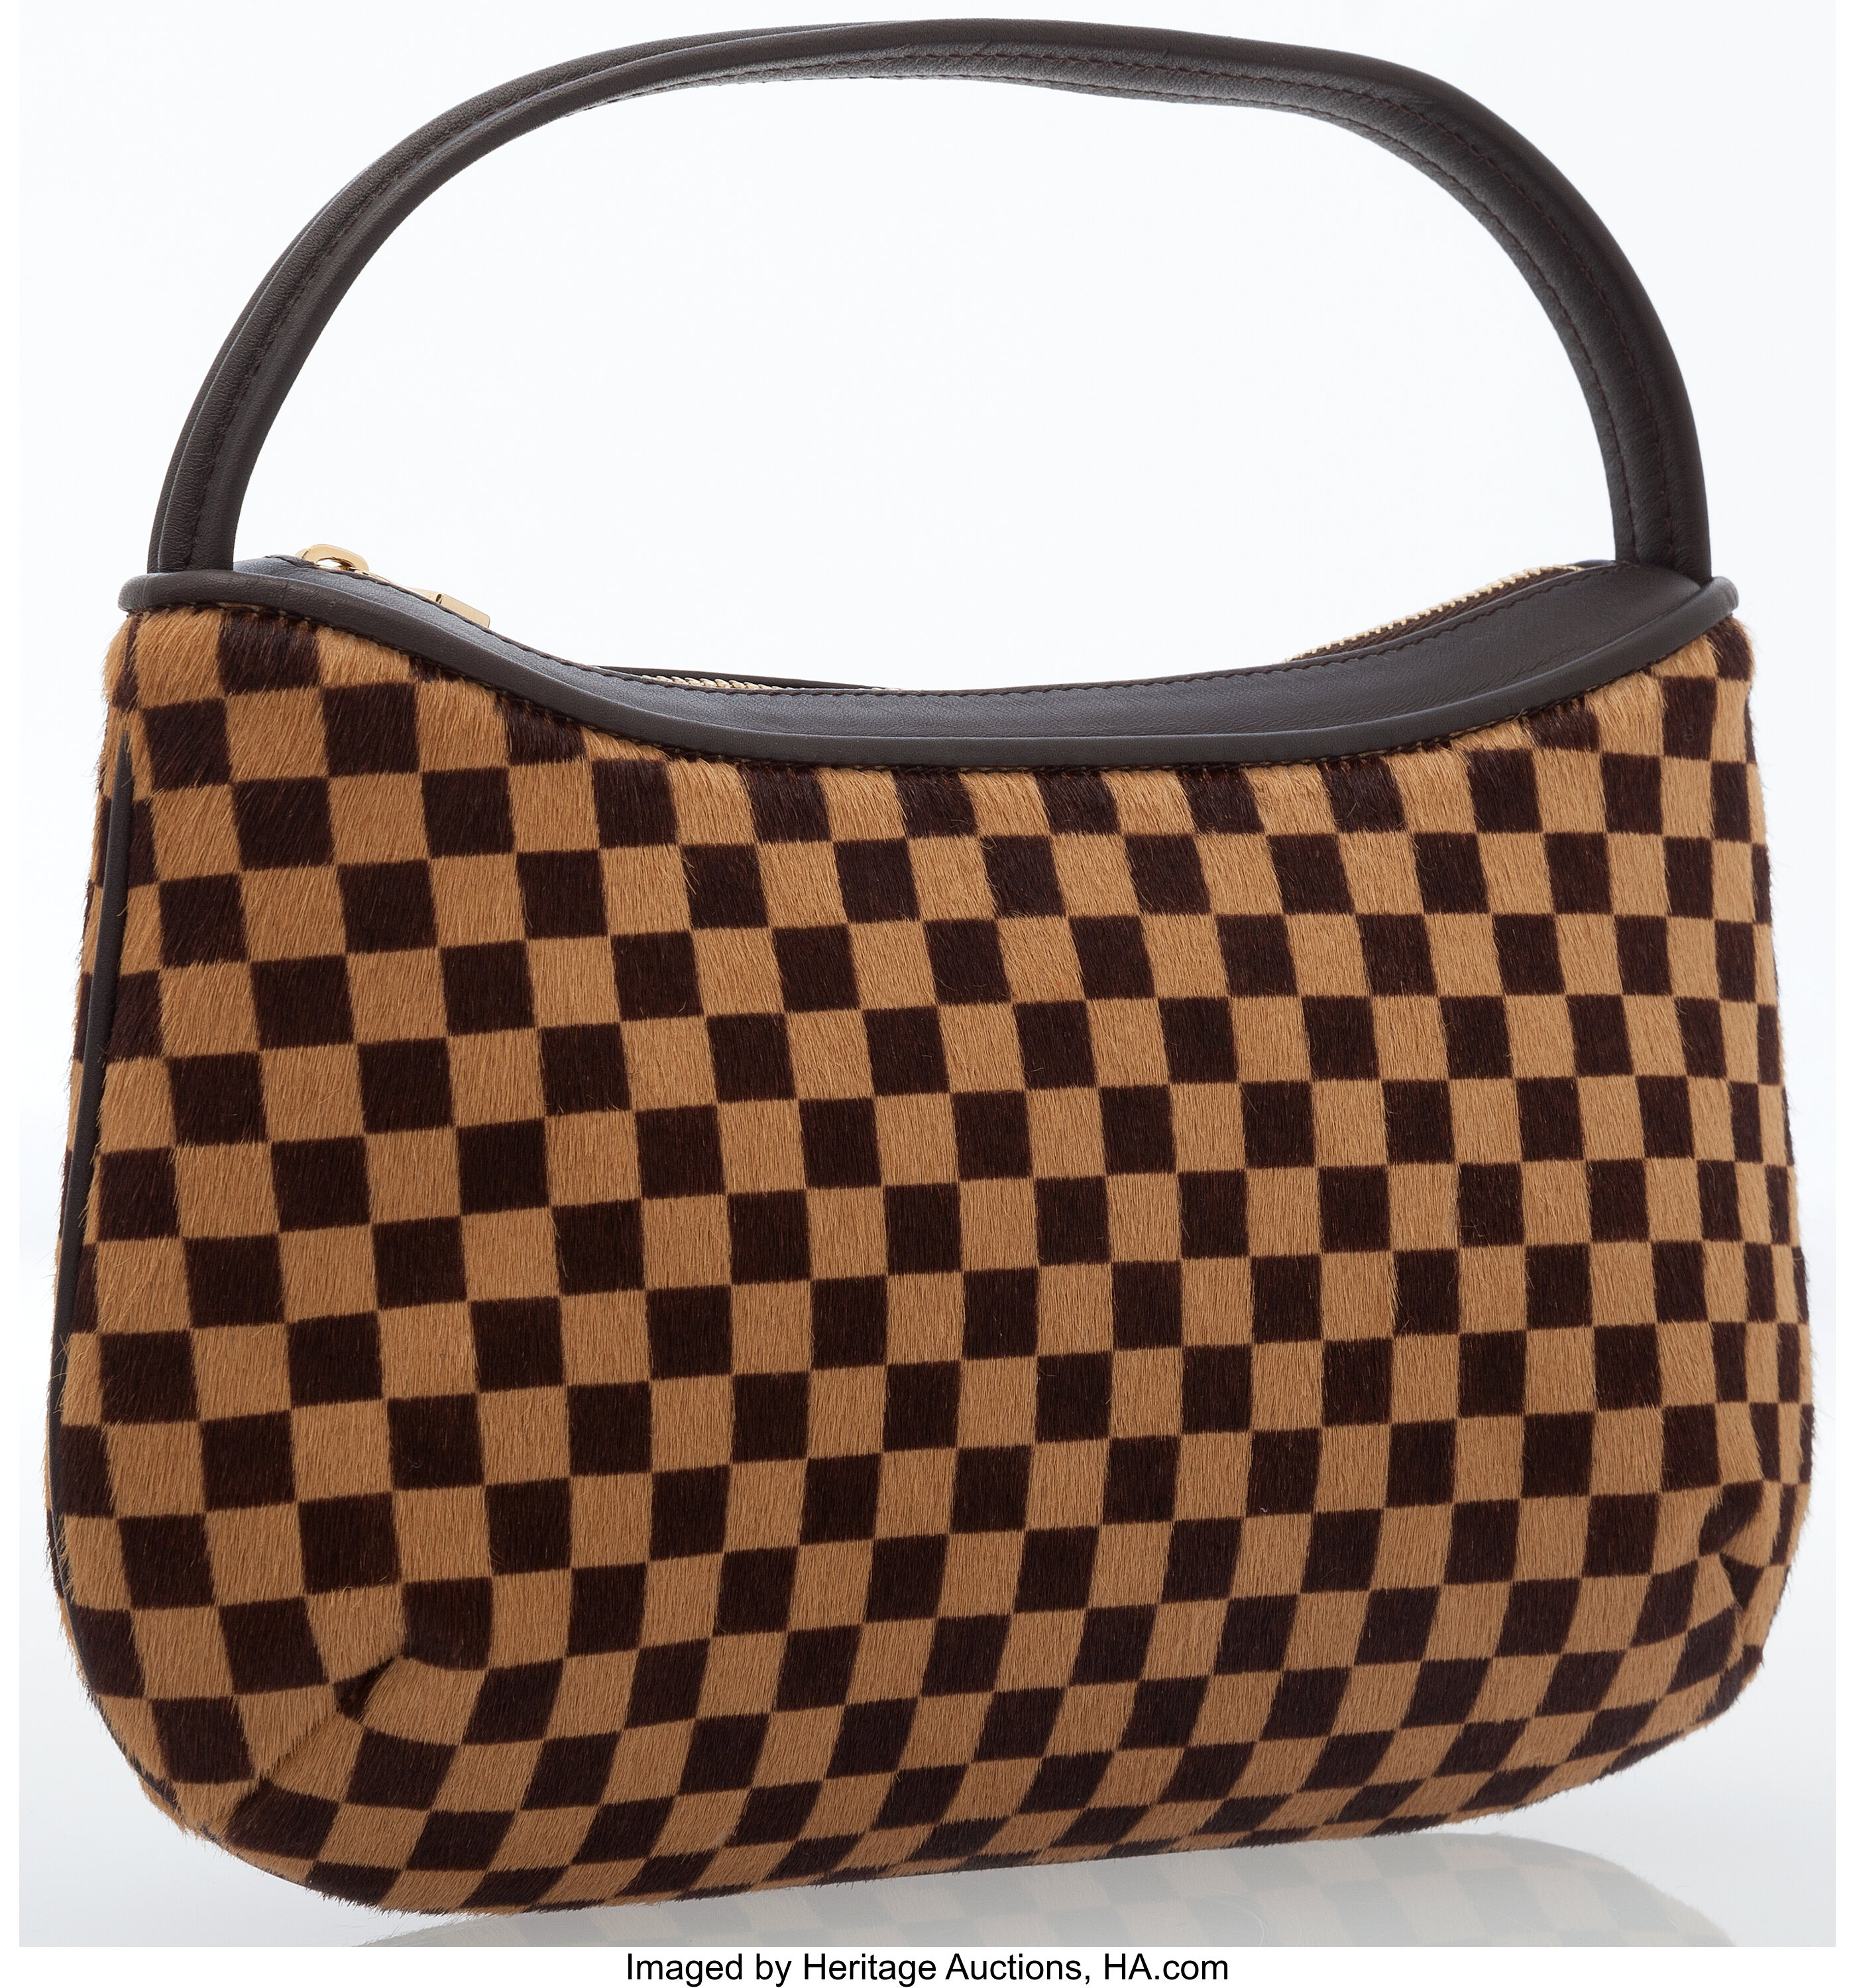 Sold at Auction: Louis Vuitton Damier Ebene Hobo Bag